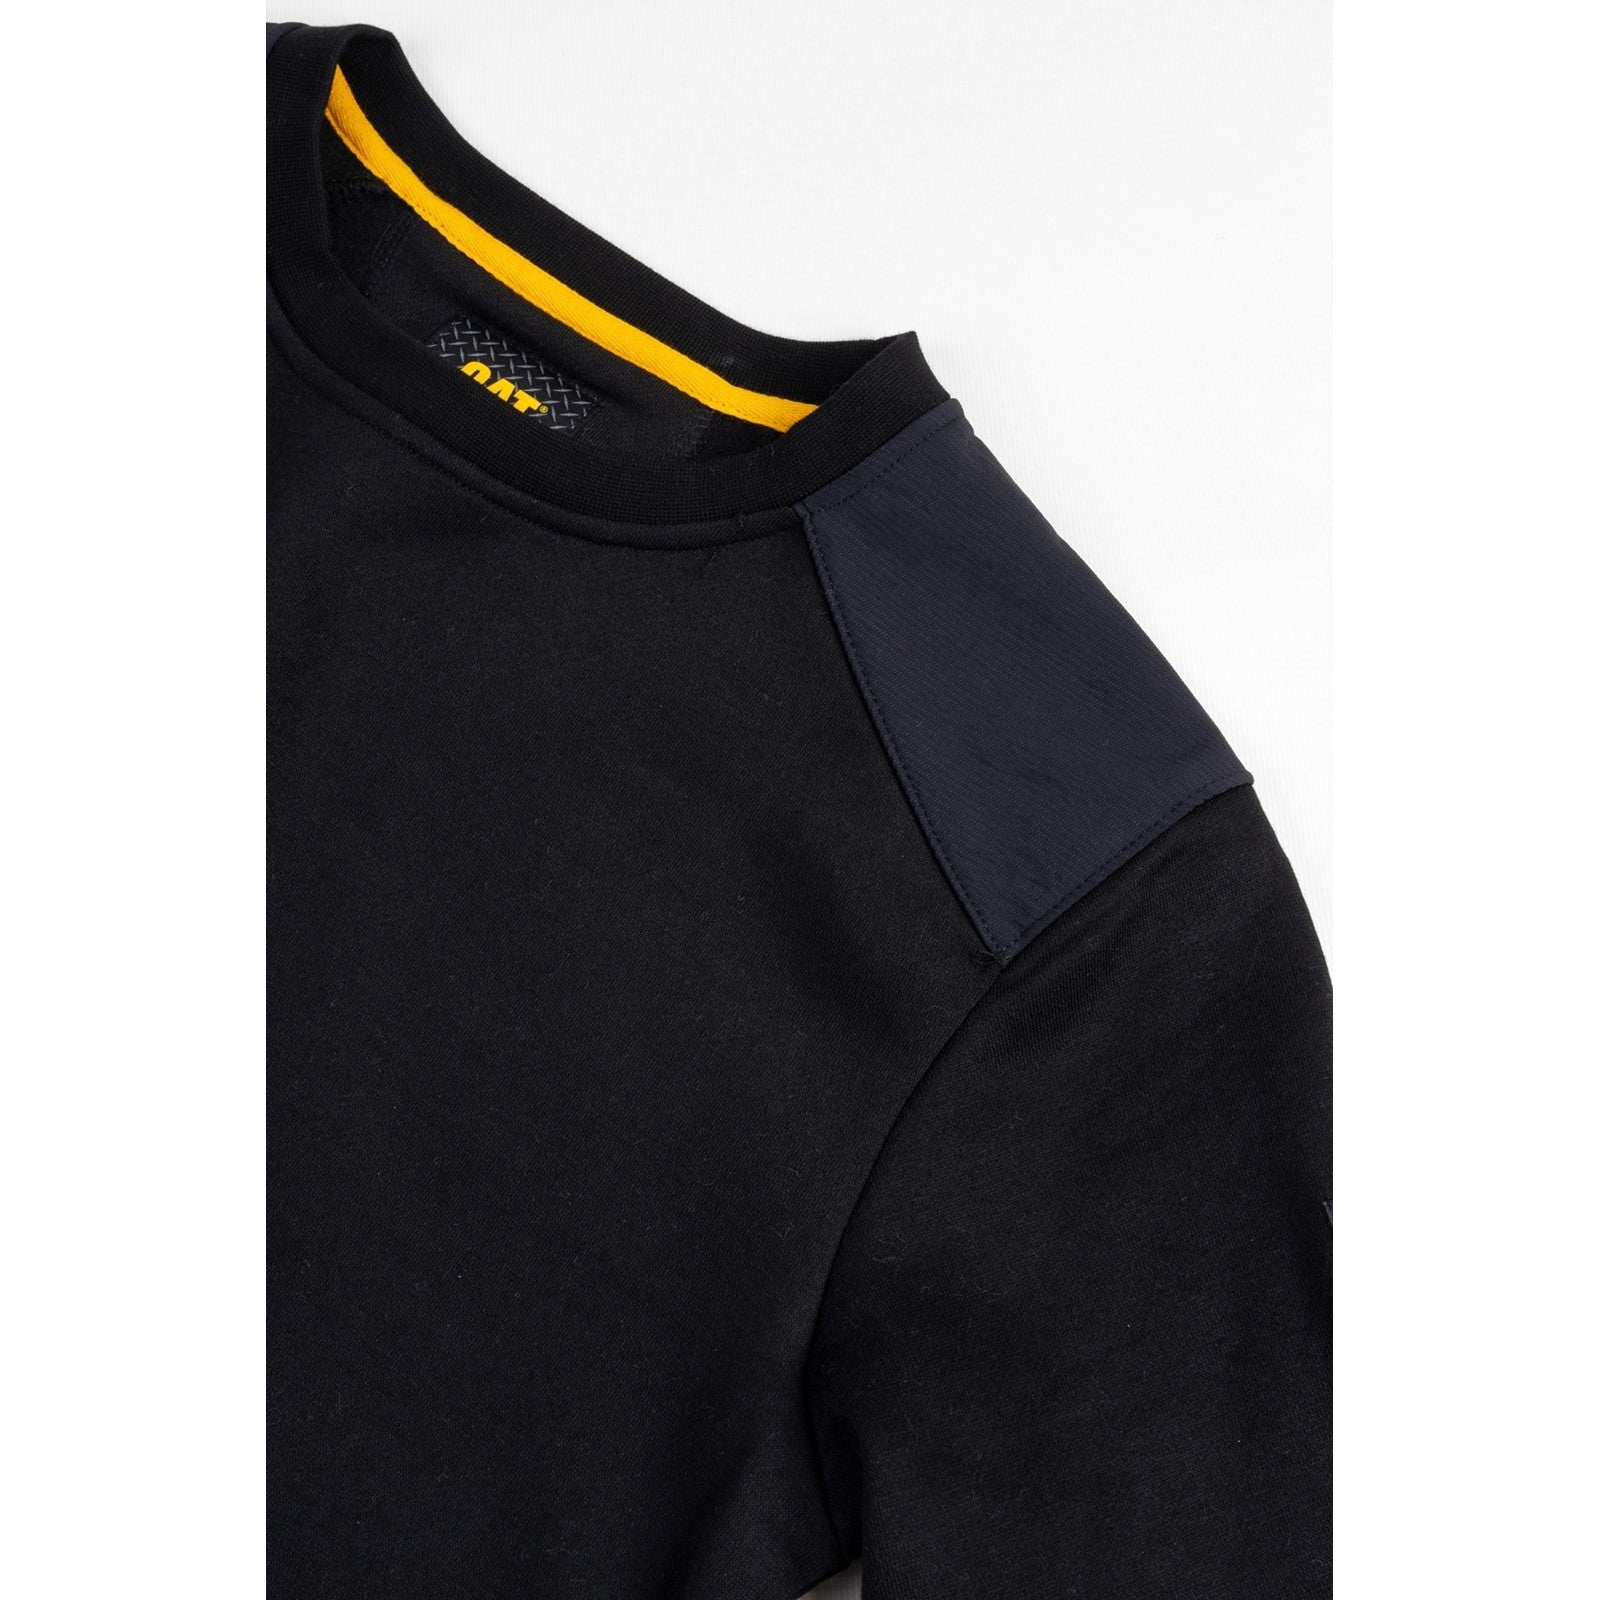 Caterpillar Essentials Crewneck Sweatshirt in Black. Collar and Shoulder 